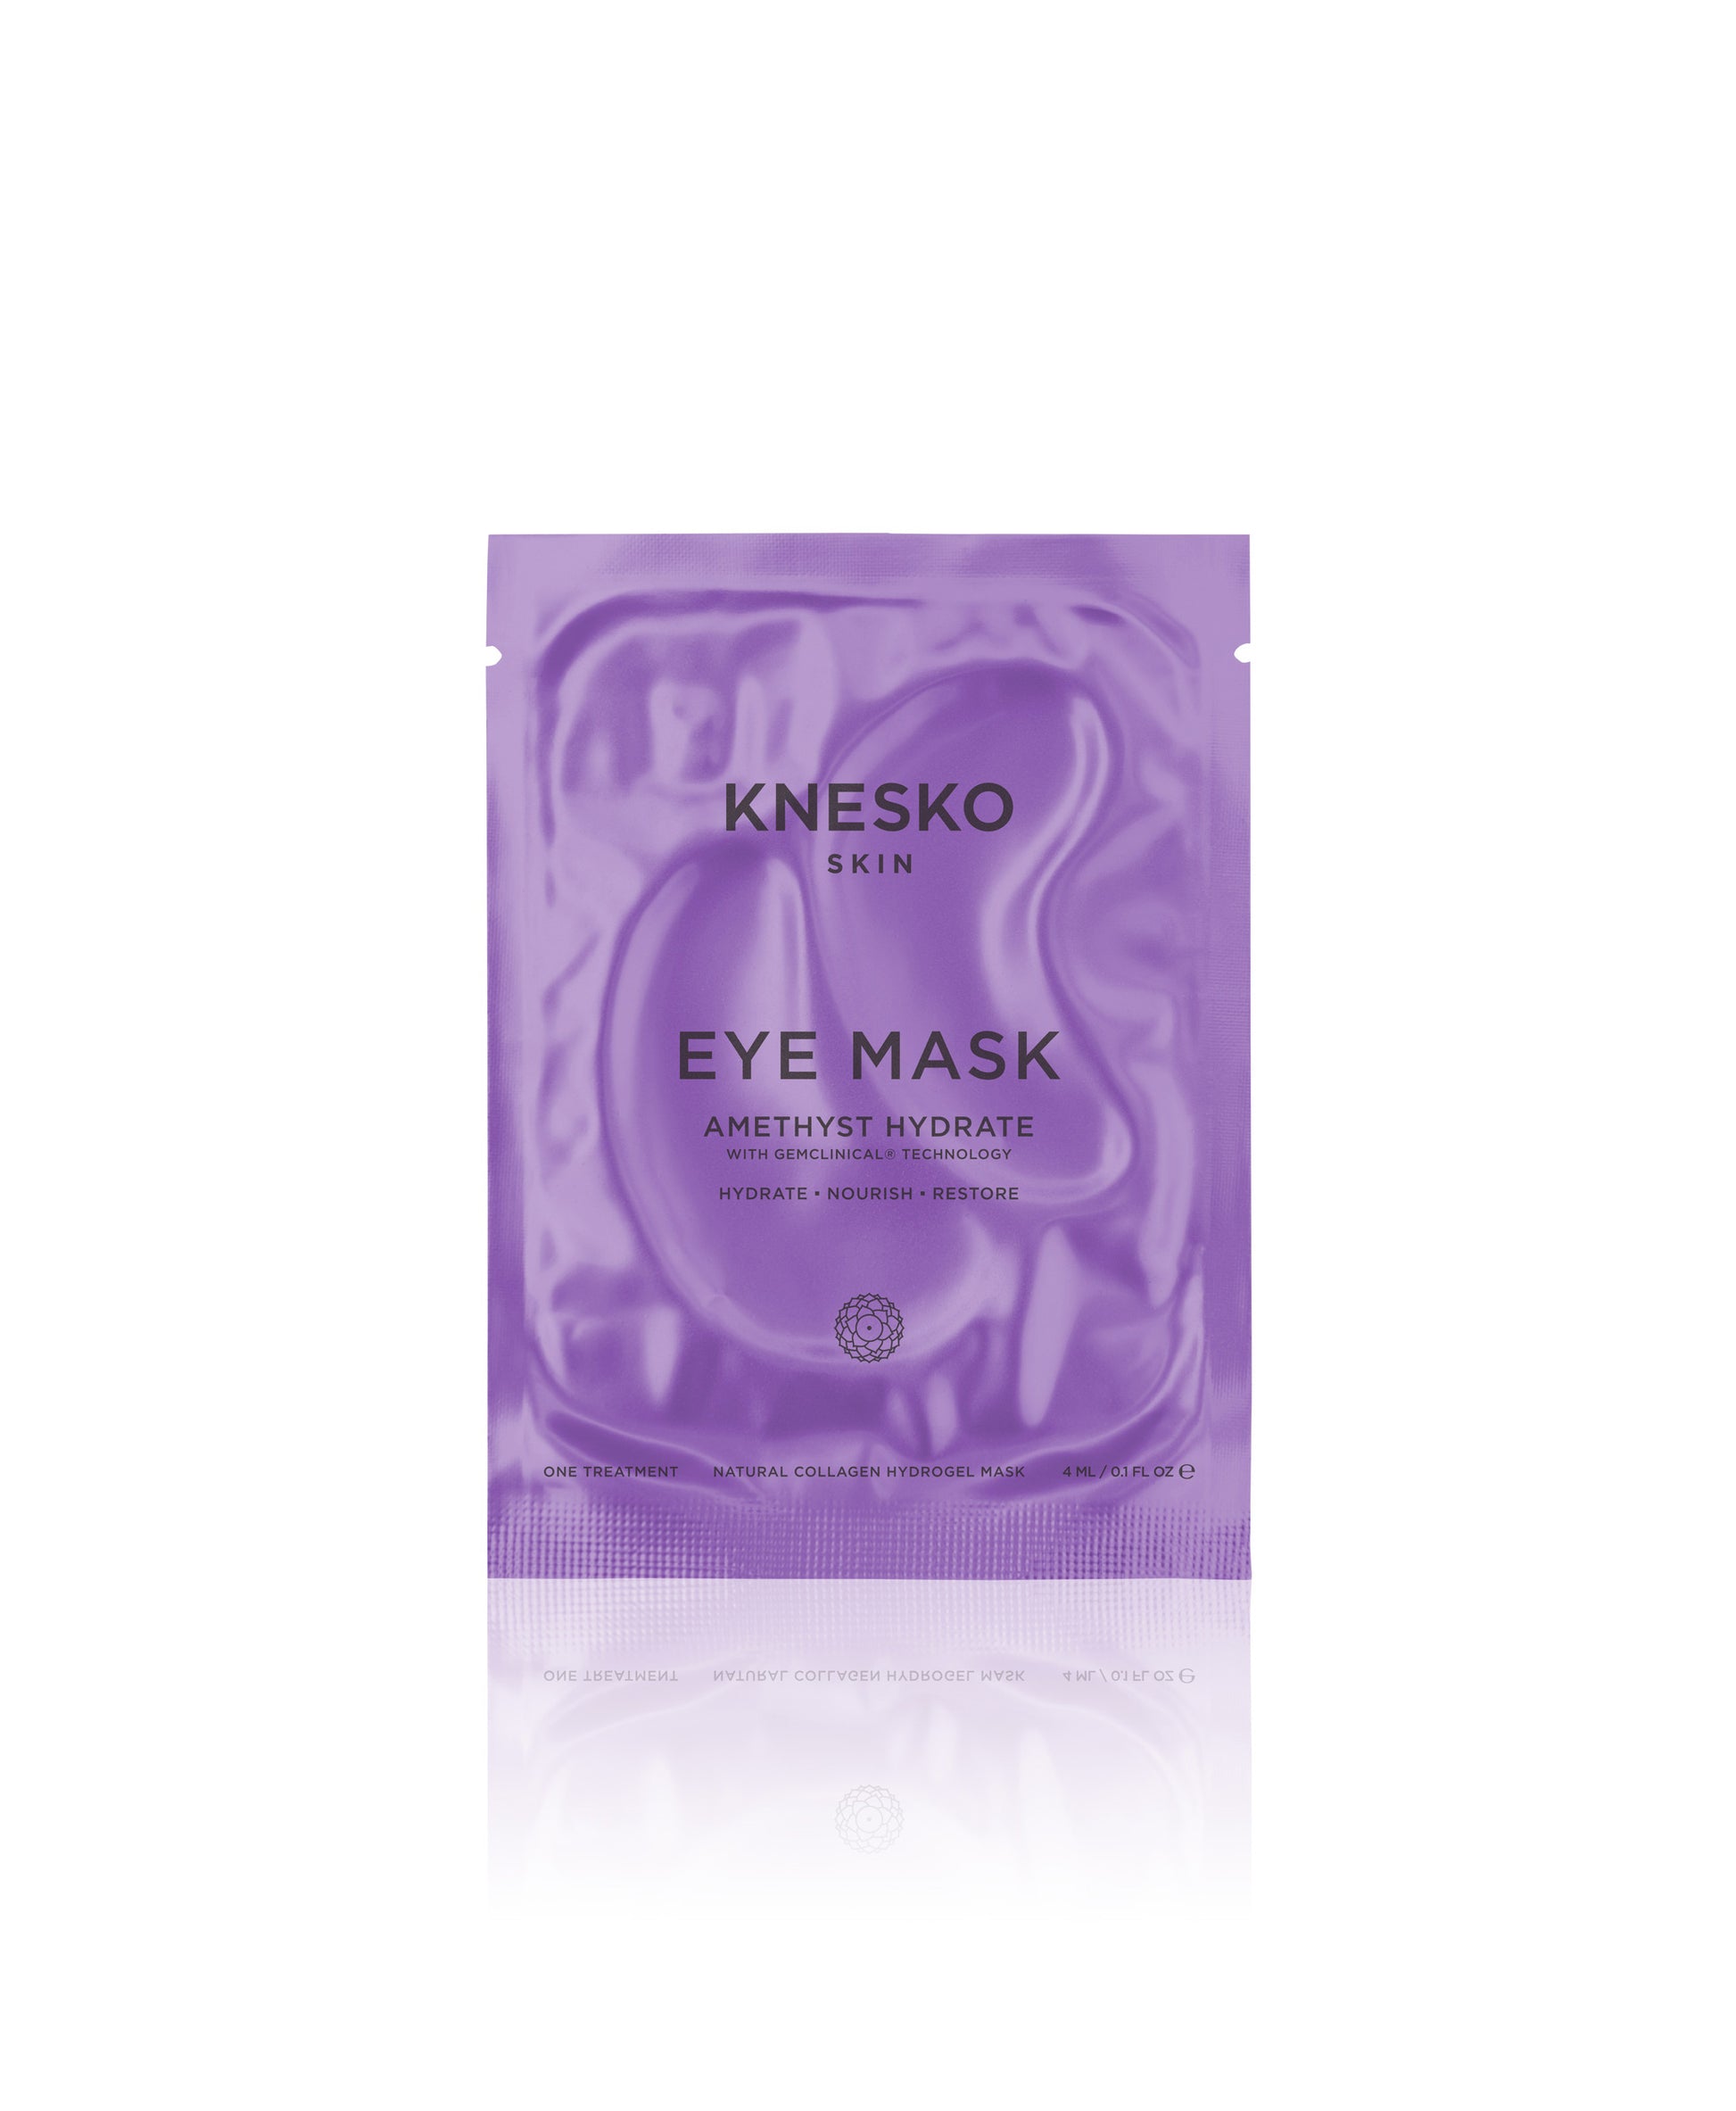 Amethyst Hydrate Collagen Eye Mask packaging.